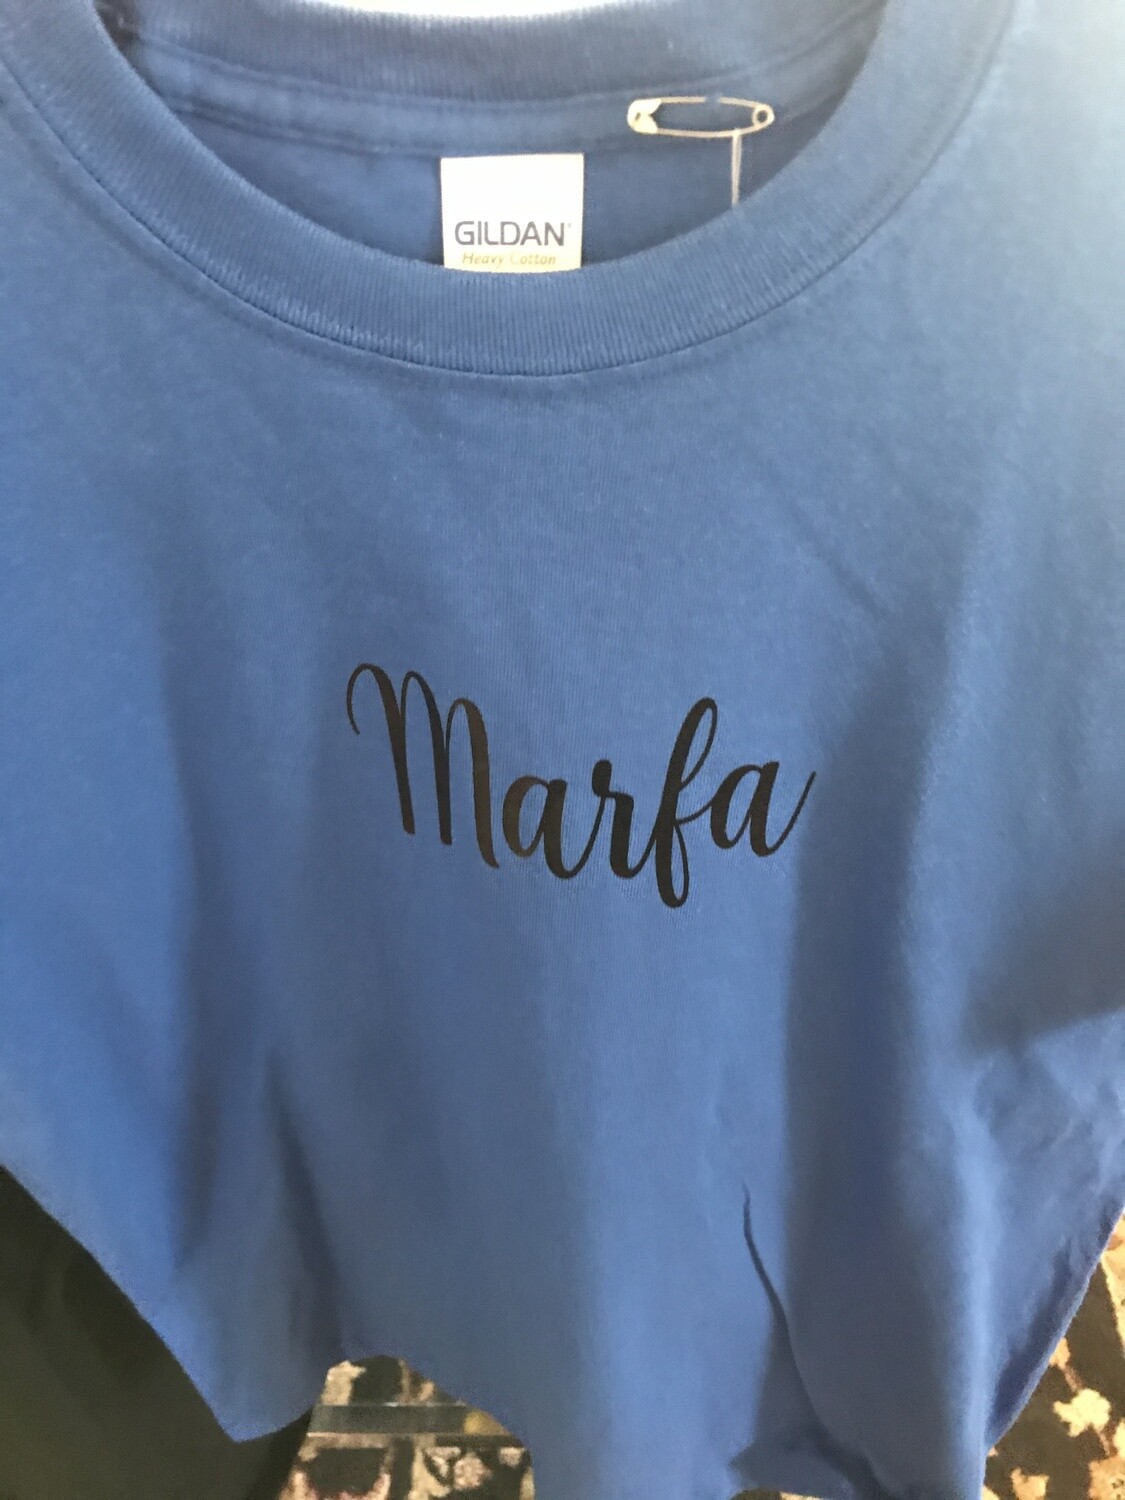 Marfa T-Shirt (Youth) - Light Blue/Navy Blue